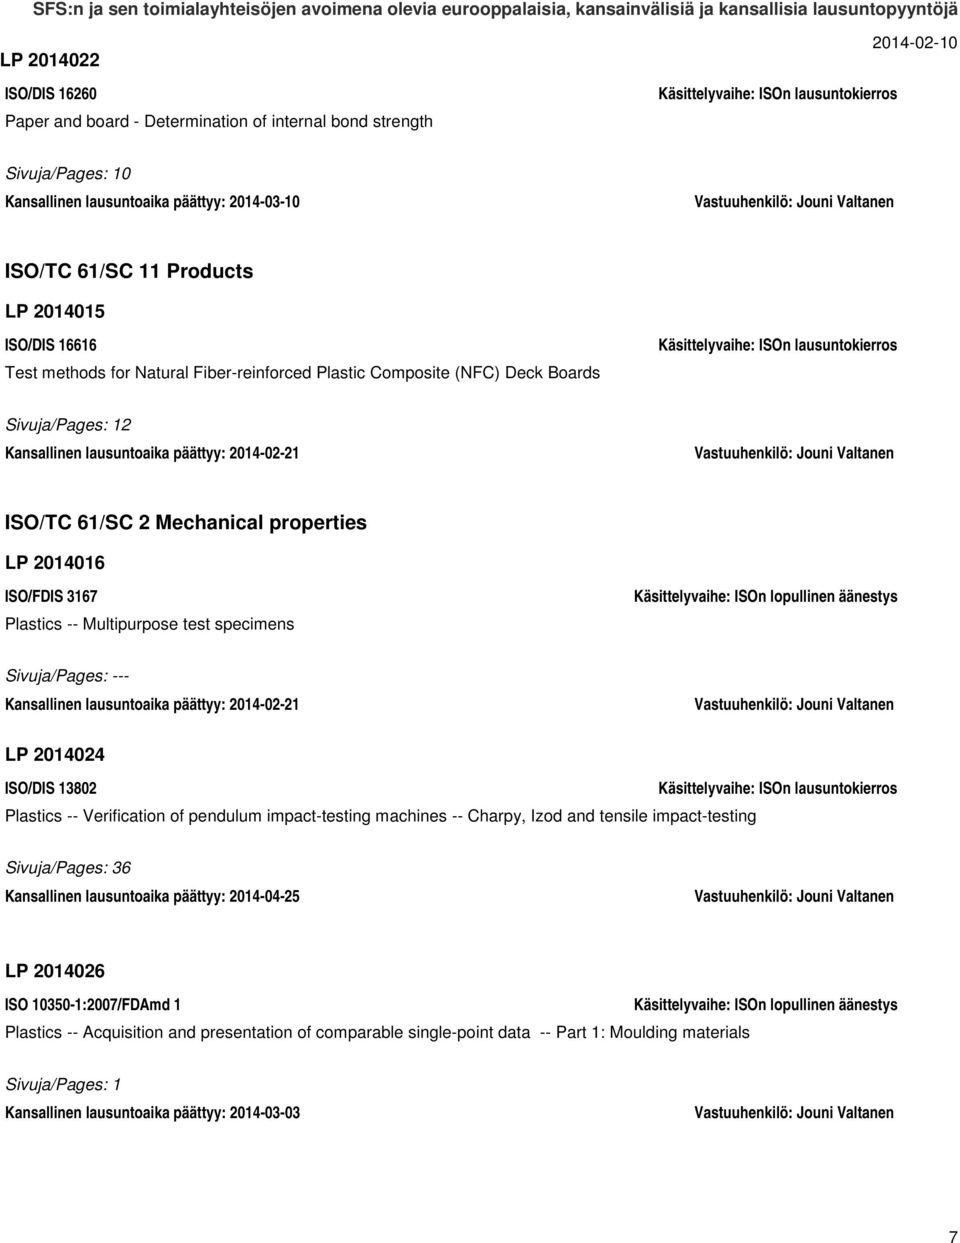 Plastics -- Multipurpose test specimens Kansallinen lausuntoaika päättyy: 2014-02-21 LP 2014024 ISO/DIS 13802 Plastics -- Verification of pendulum impact-testing machines -- Charpy, Izod and tensile